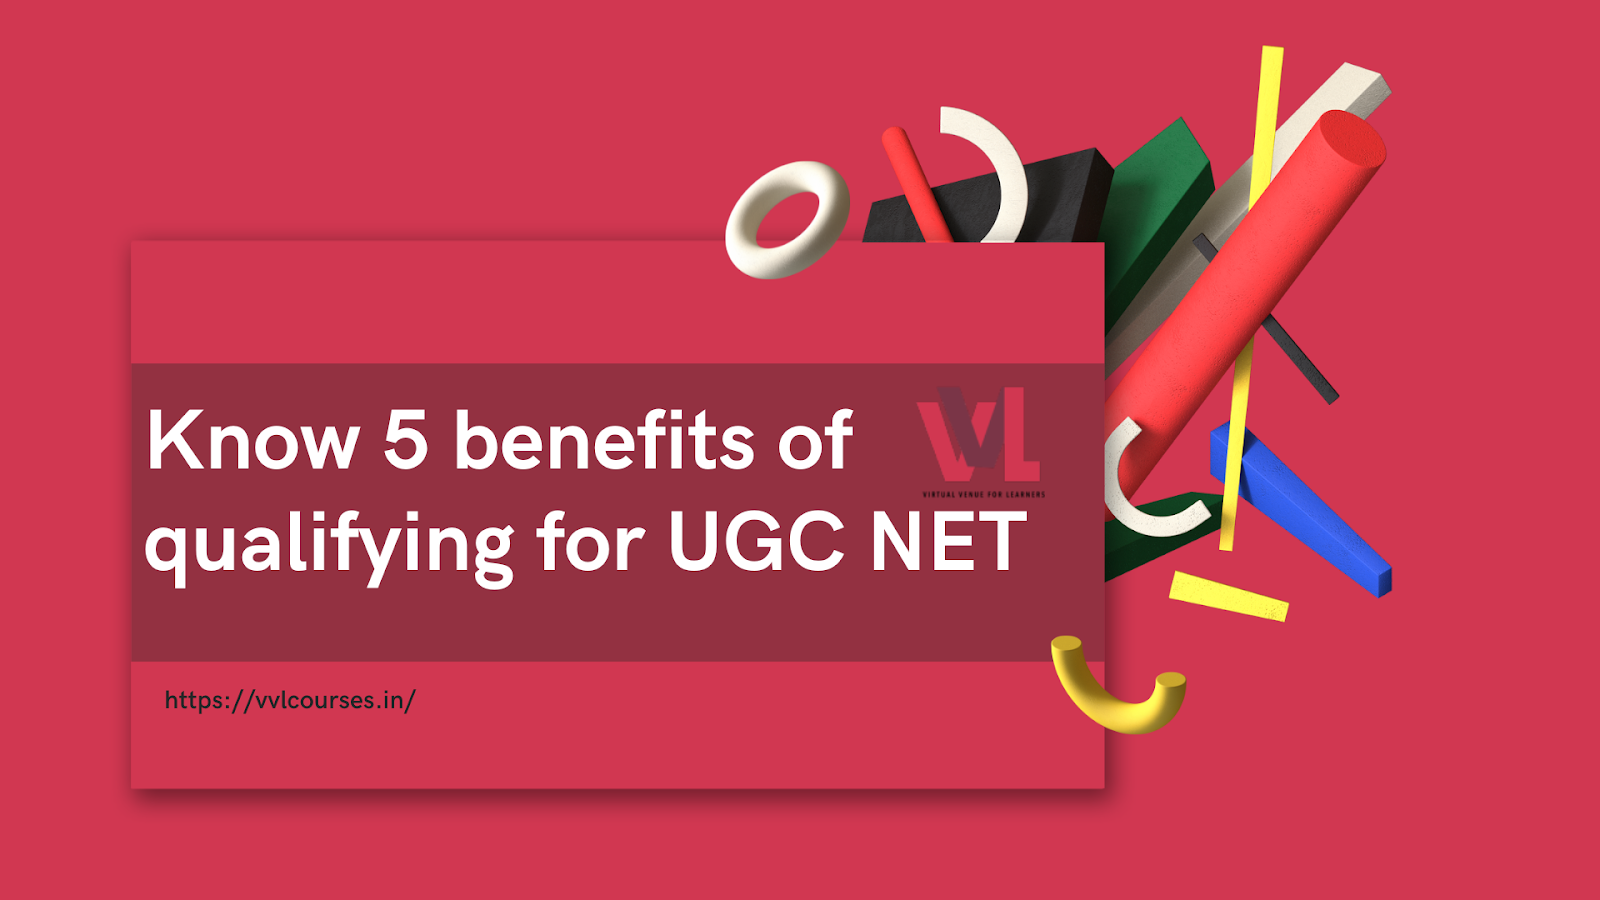 CR J

Know 5 benefits of &amp; |
qualifying for UGC NET Al

\/